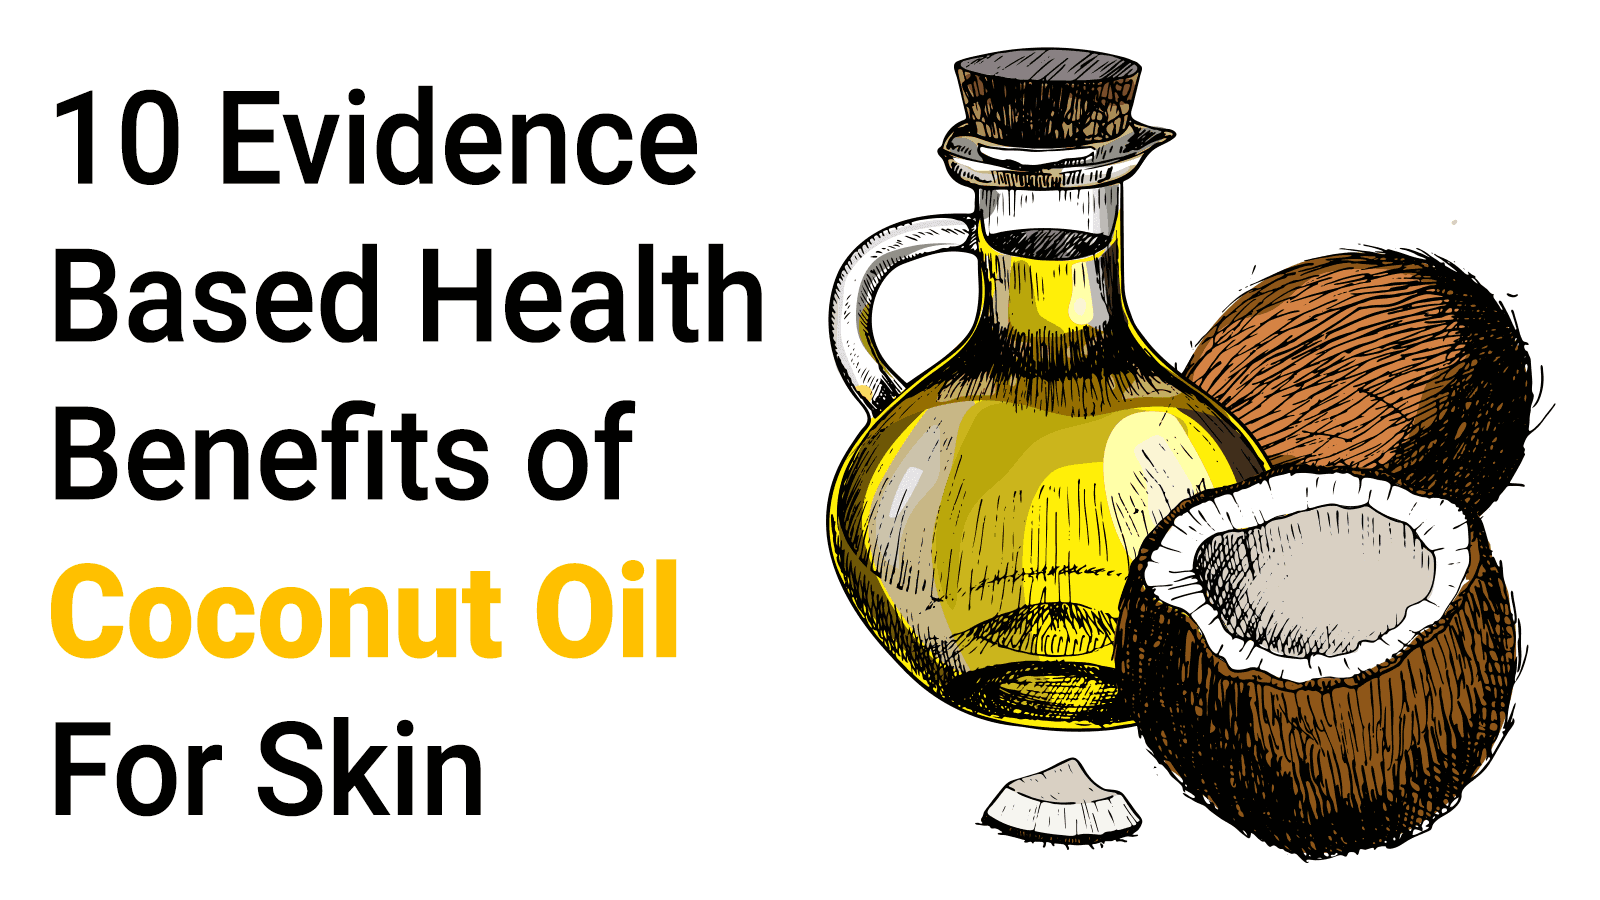 10 Evidence Based Health Benefits of Coconut Oil For Skin